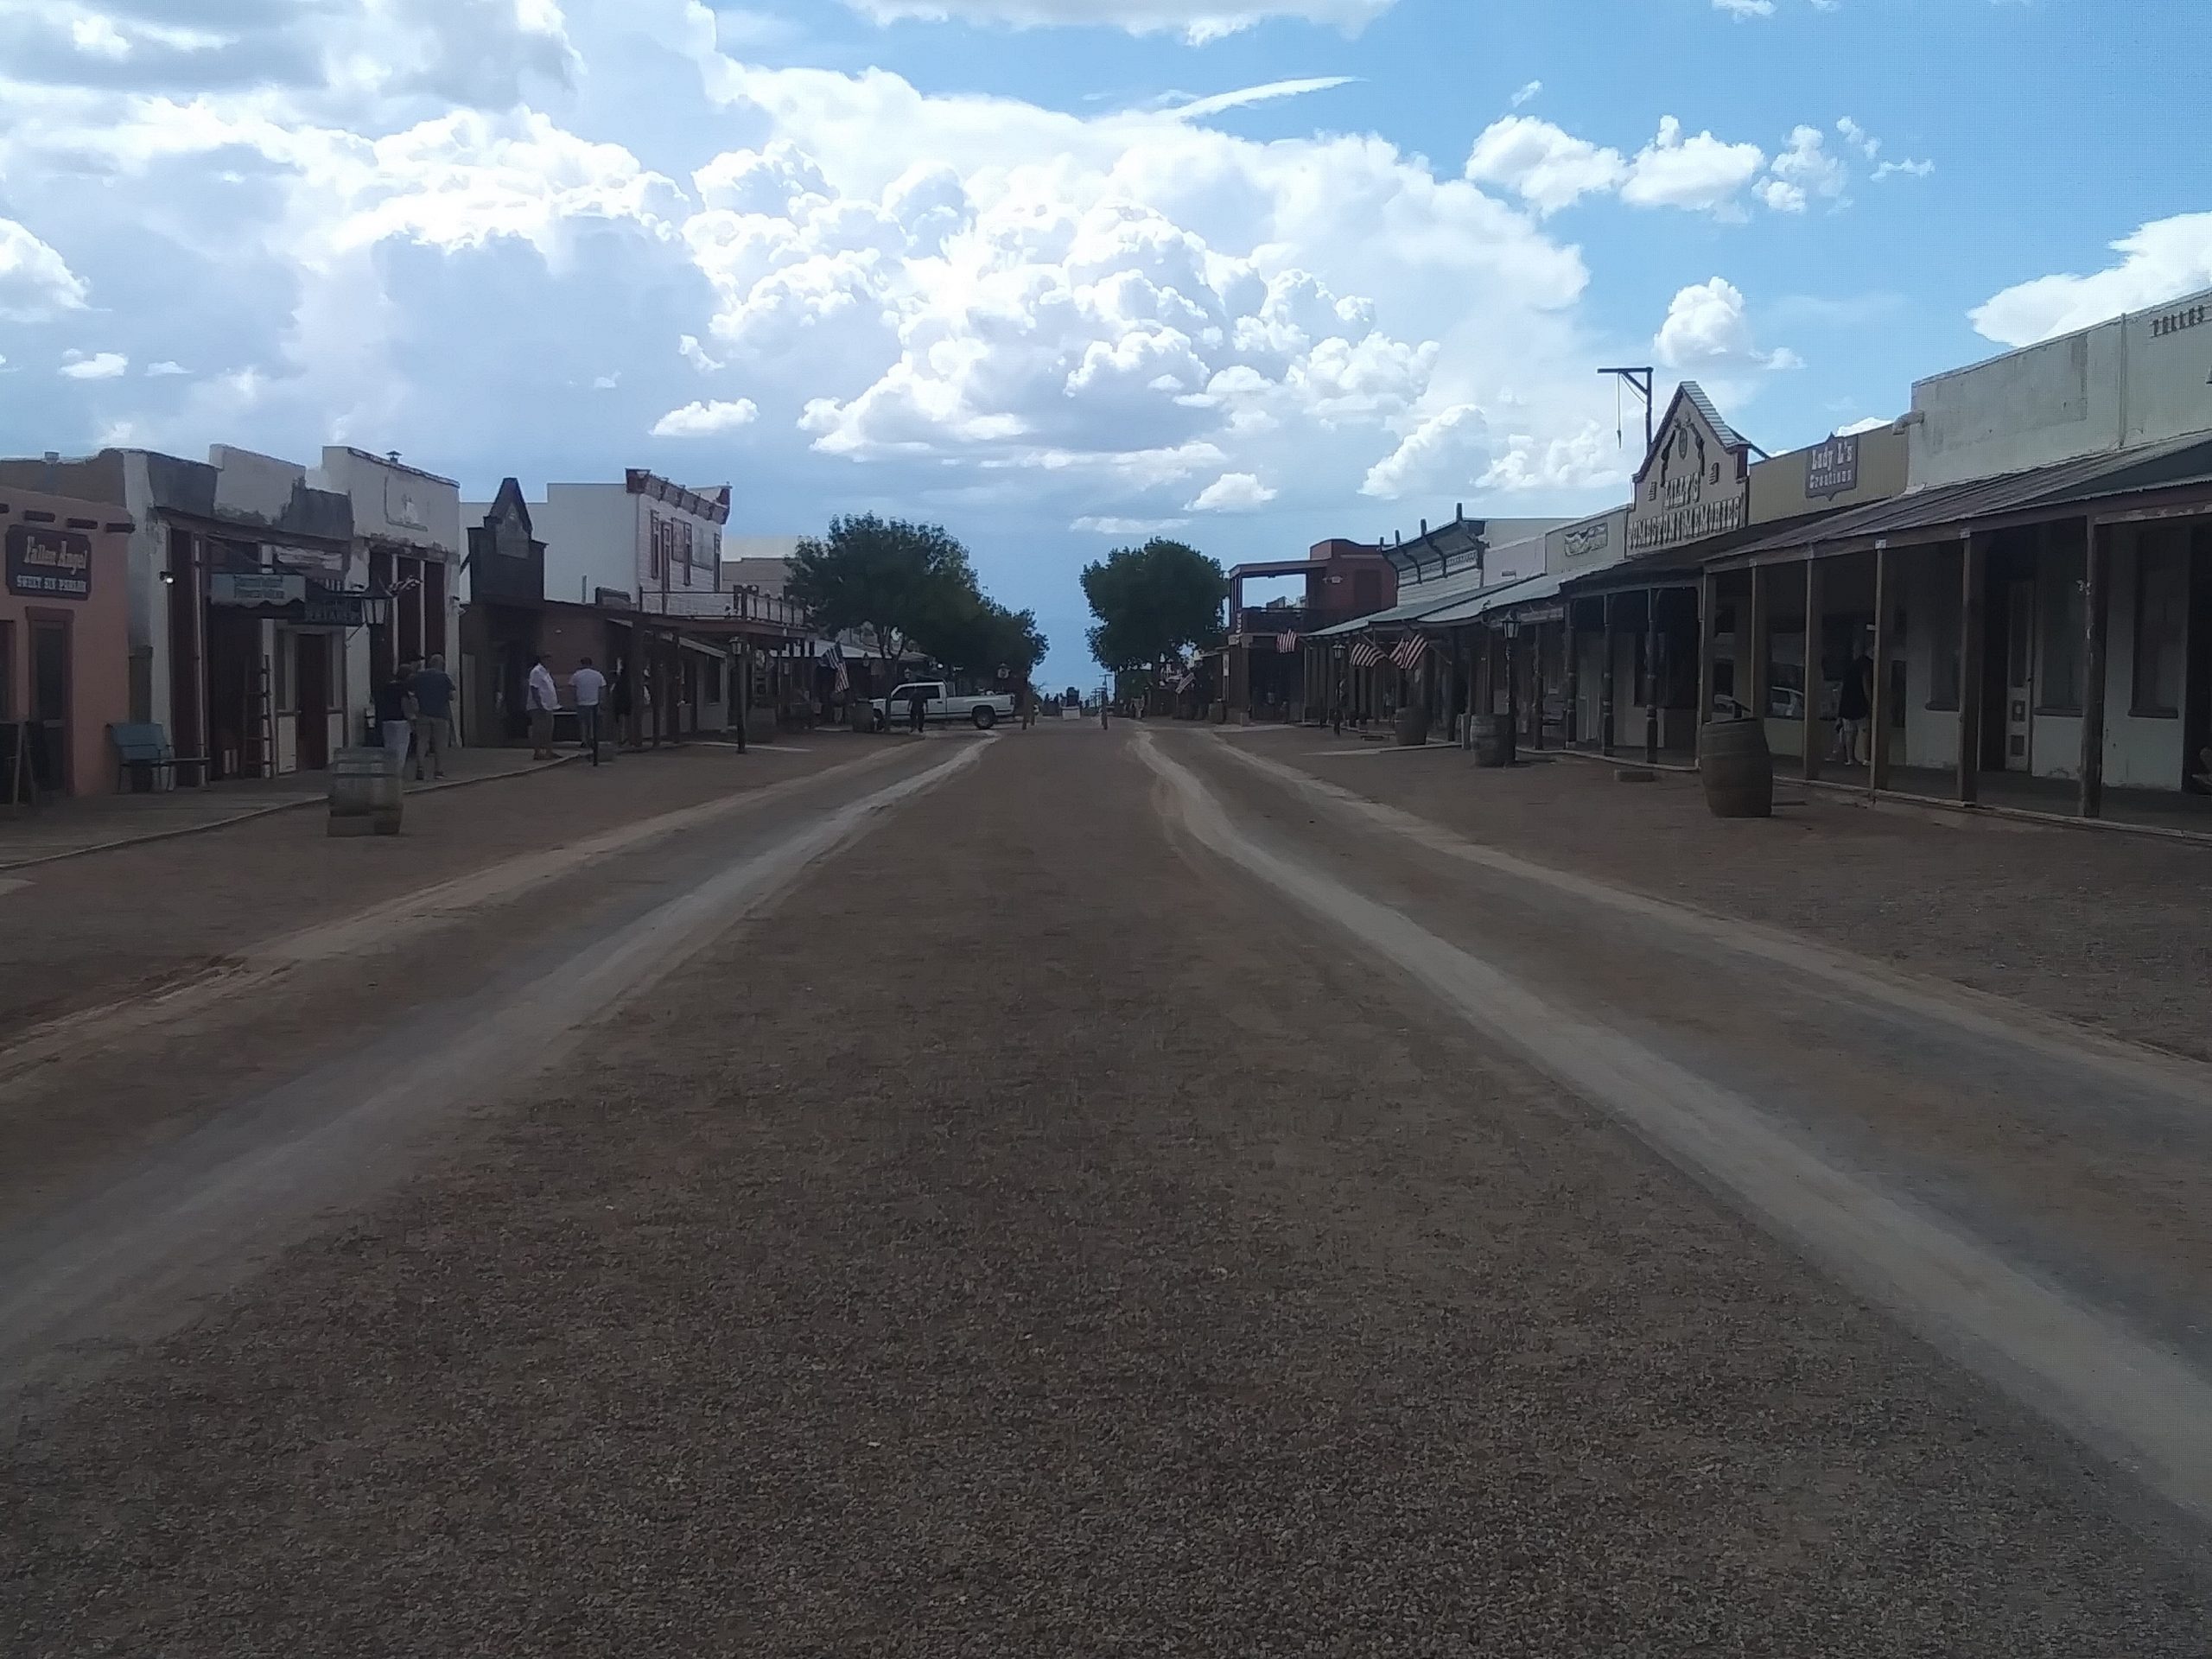 Photo of East Allen Street in Tombstone, Arizona near the telegraph pole